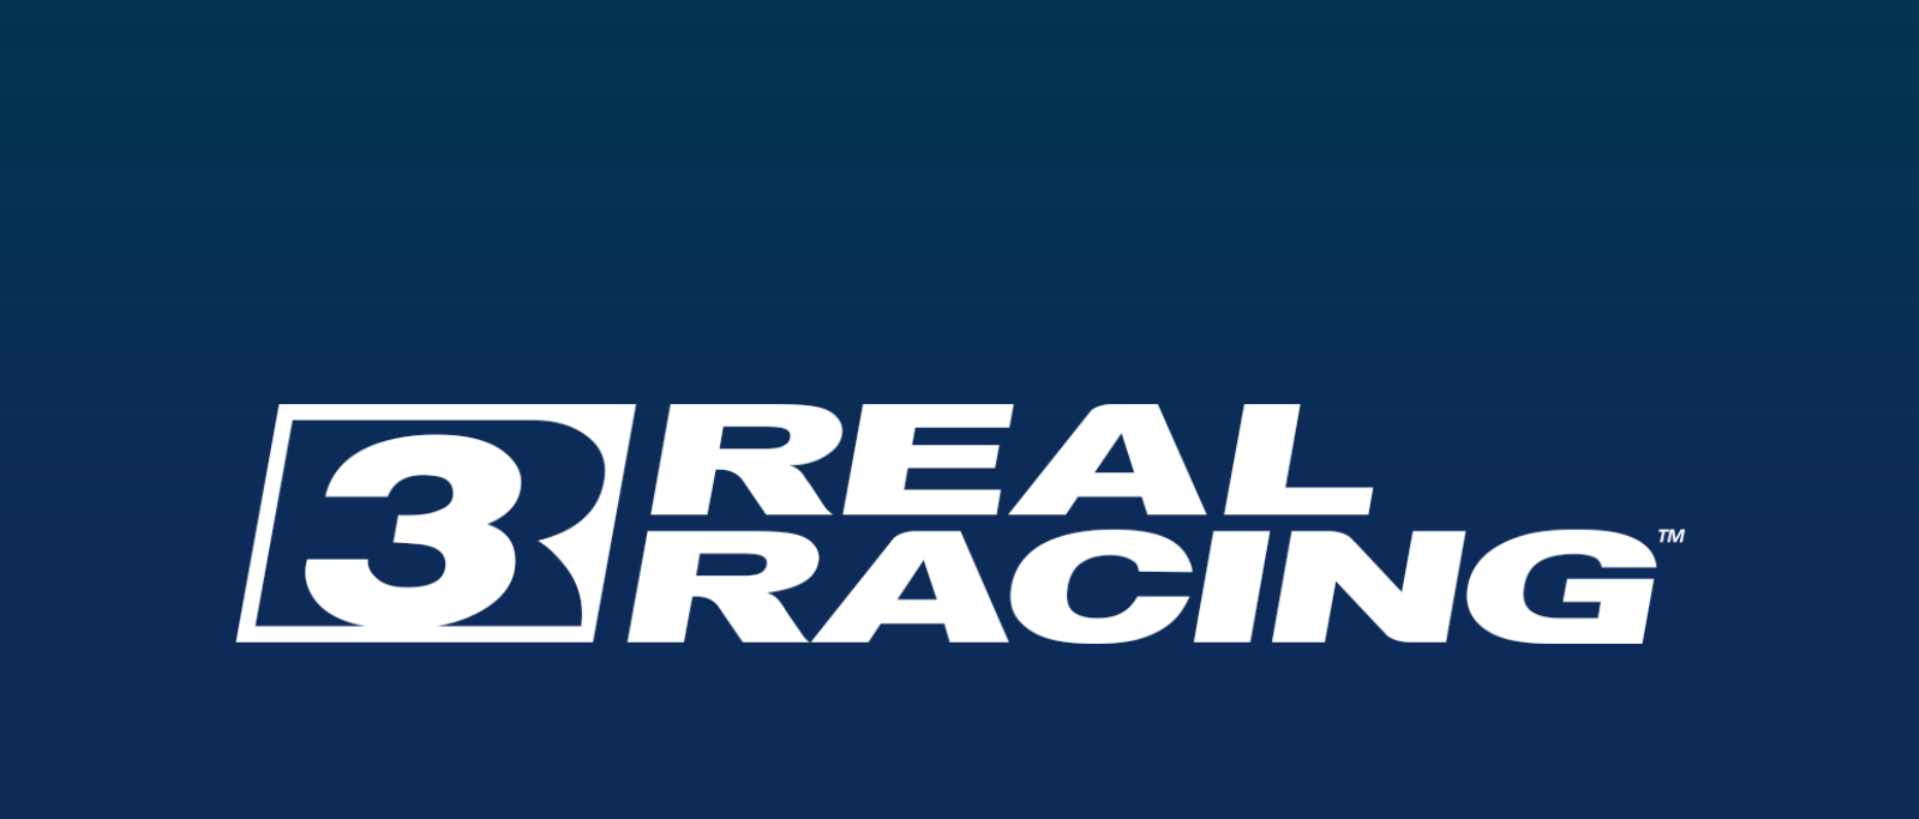 Real racing 3 logo